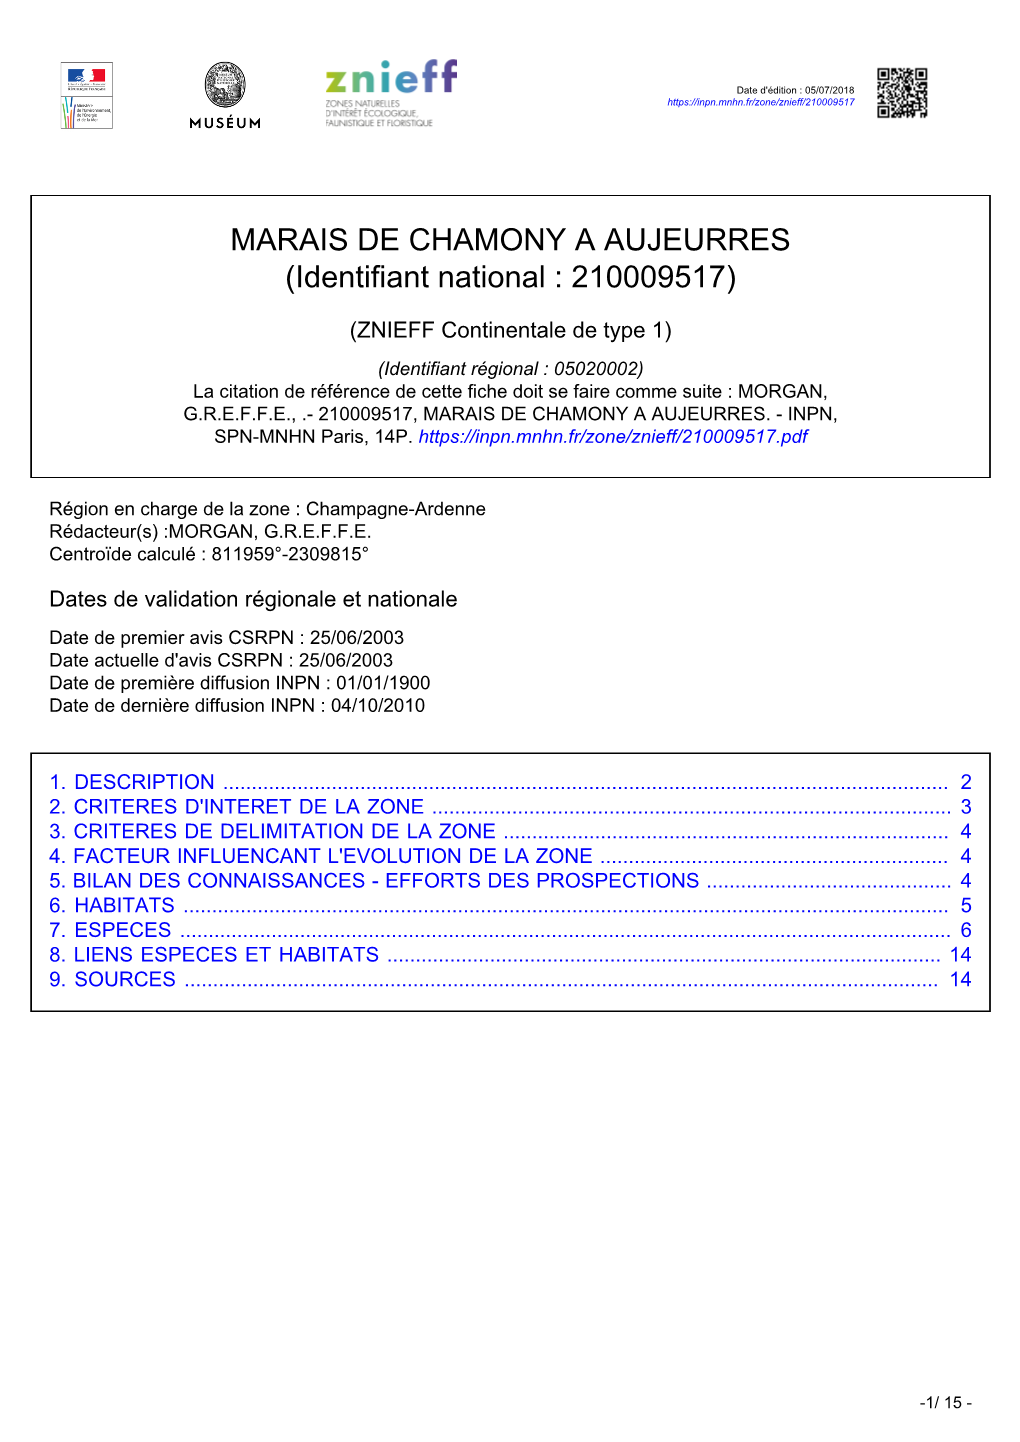 MARAIS DE CHAMONY a AUJEURRES (Identifiant National : 210009517)